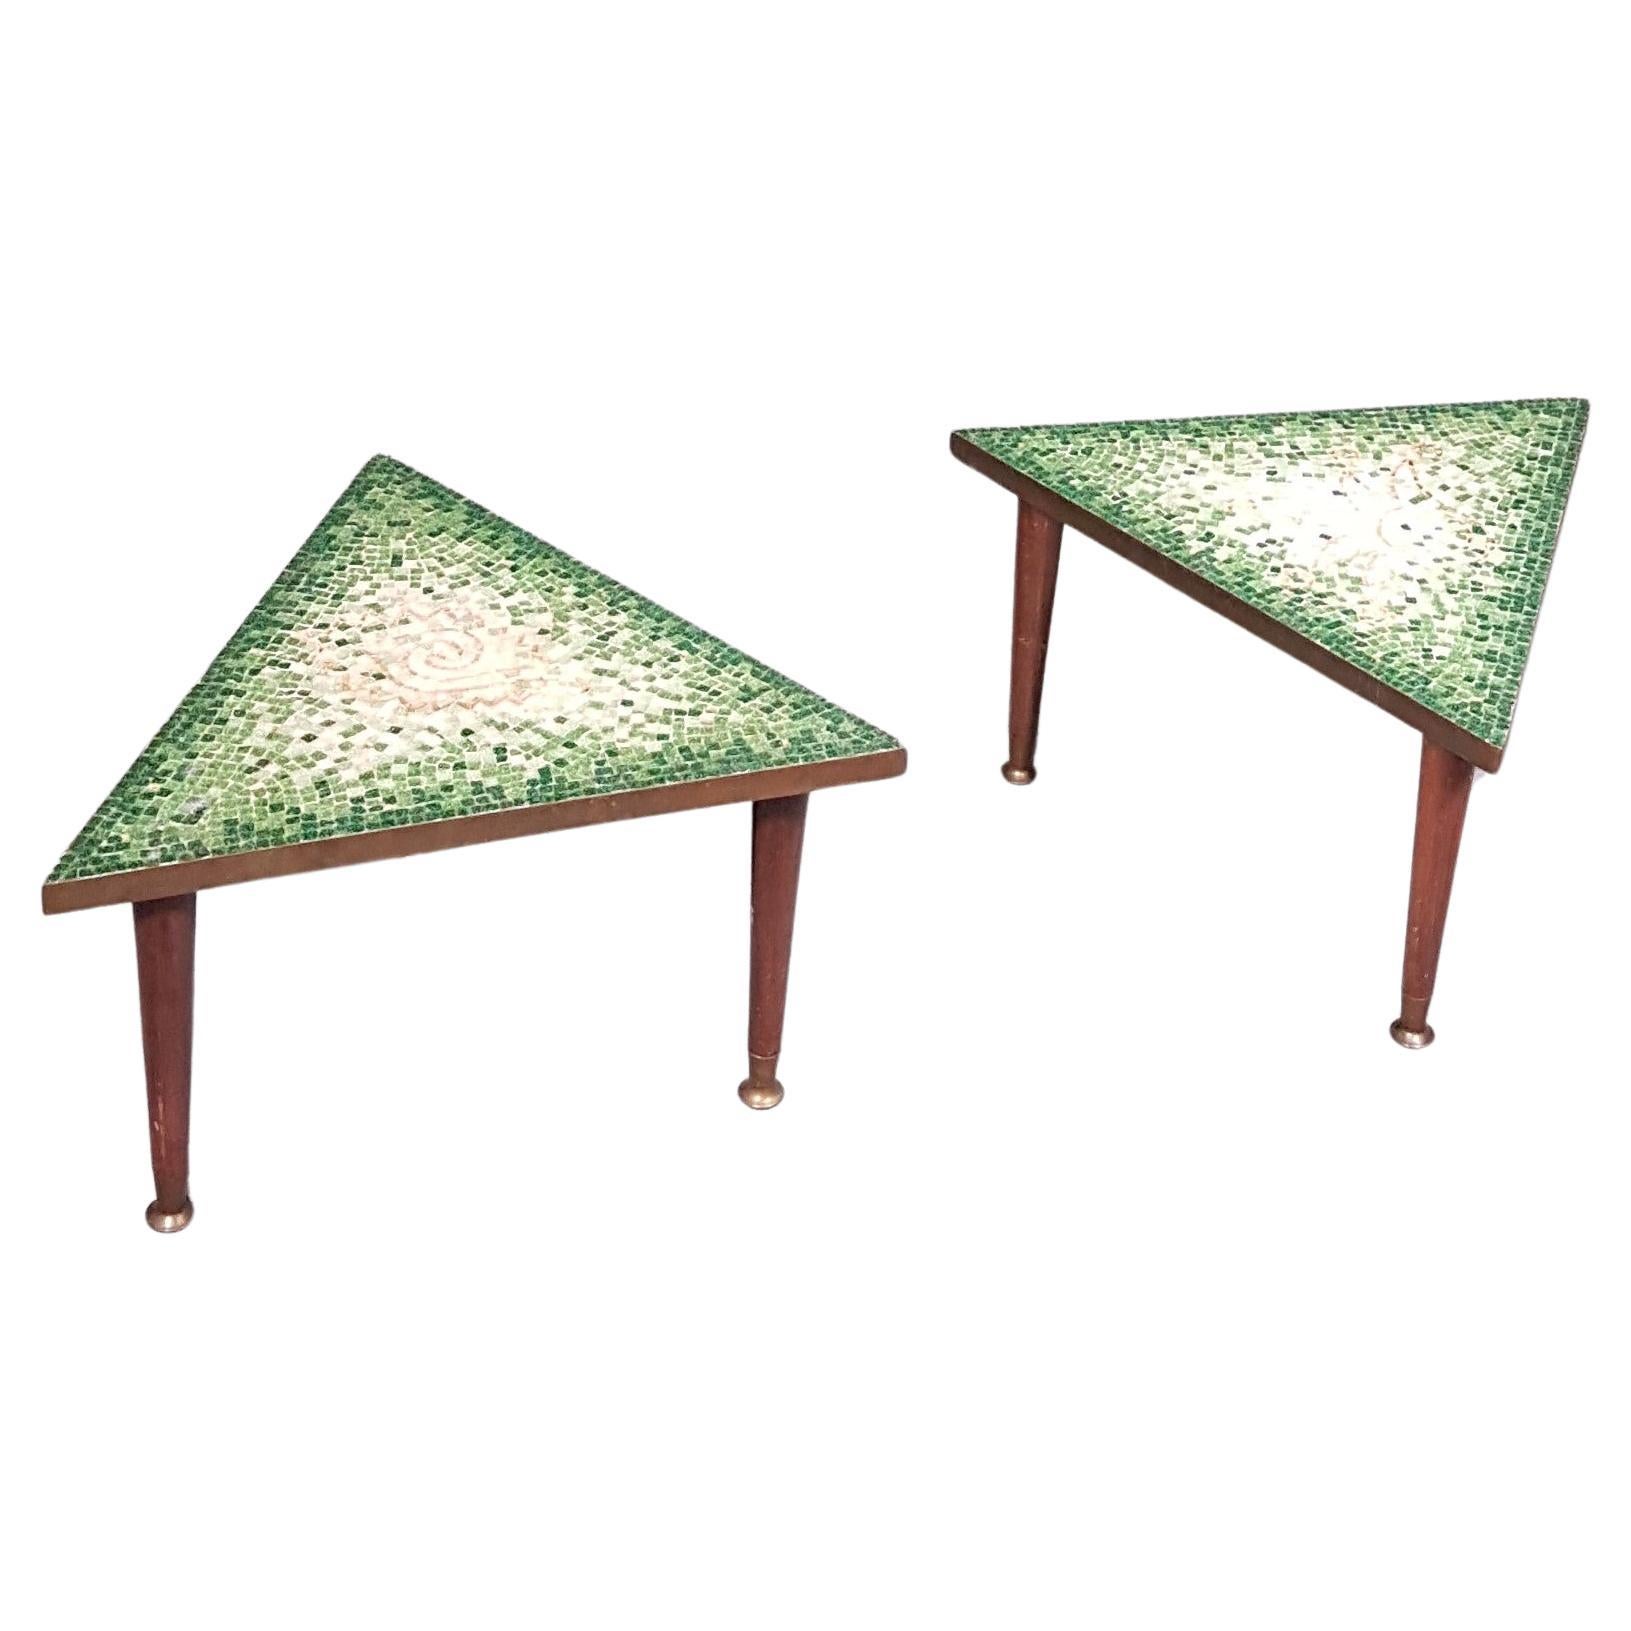 Pair of glass tile mosaic side tables - Genaro Alvarez - 1950s BY GETANO For Sale